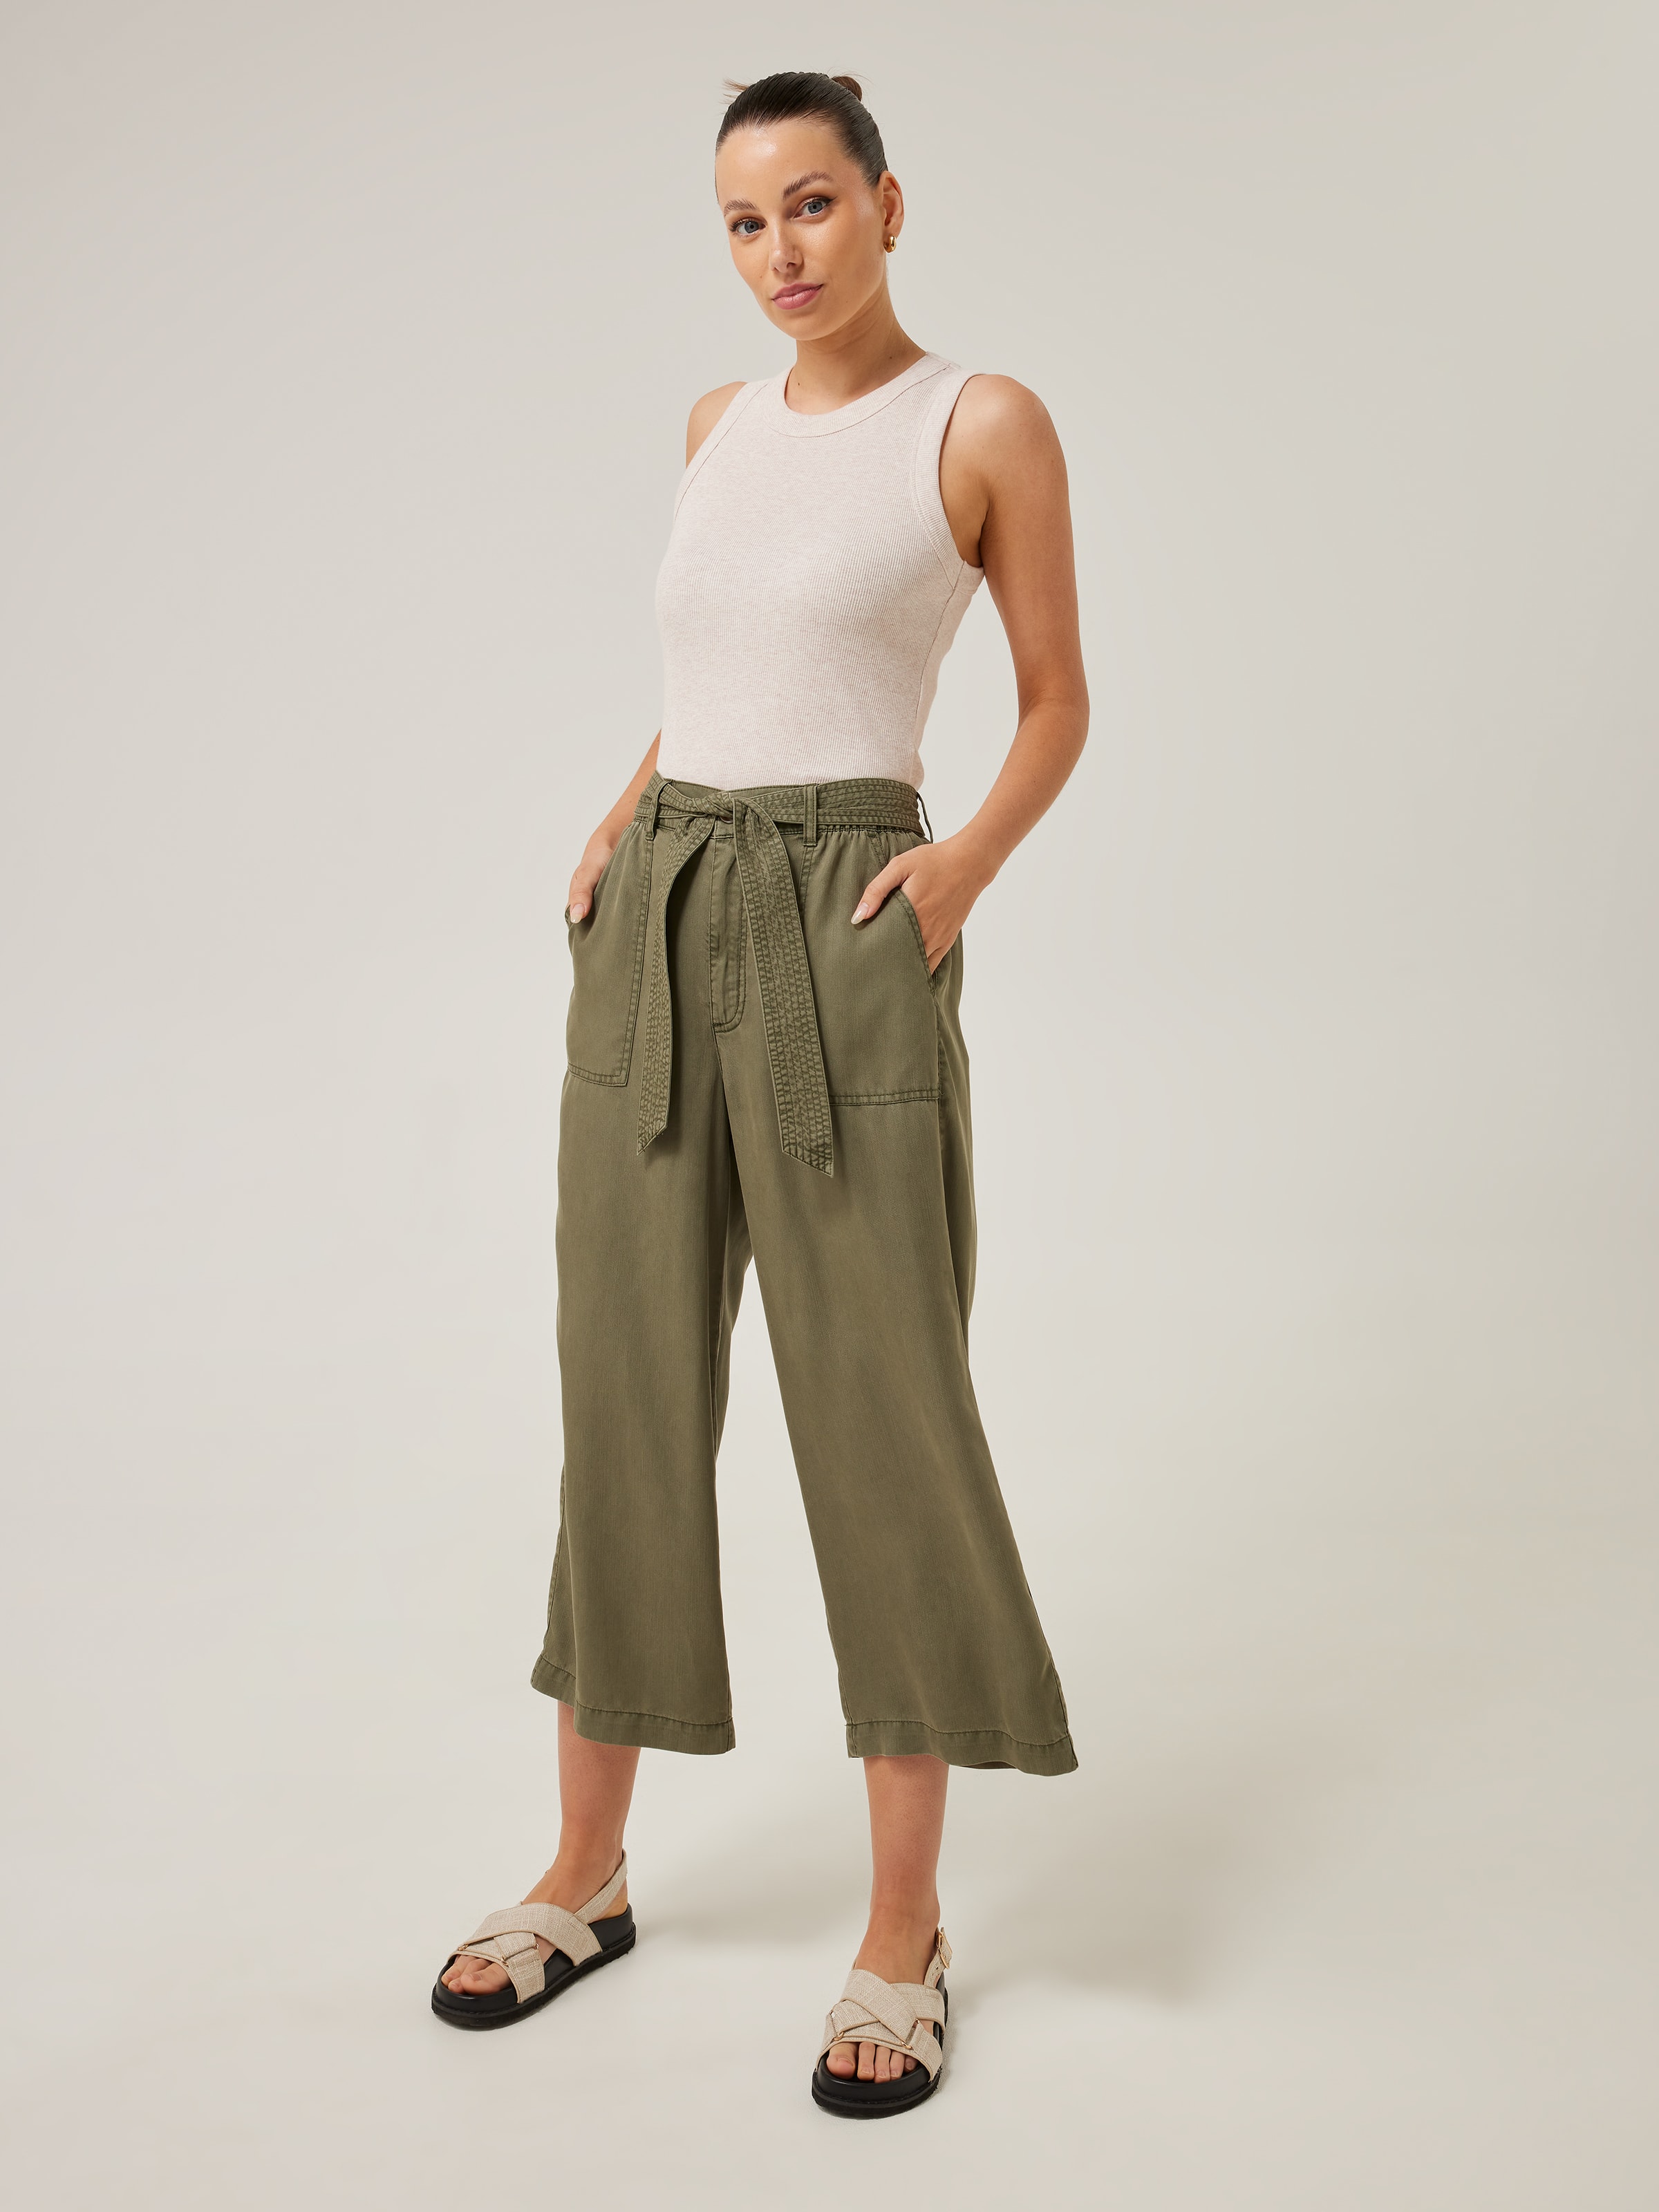 Womens Linen Capris Casual Summer Cropped Pants Elastic Waist Back Straight  Legs 3/4 Length Shorts Ankle Pants with Pockets, Khaki, XL price in Saudi  Arabia,  Saudi Arabia